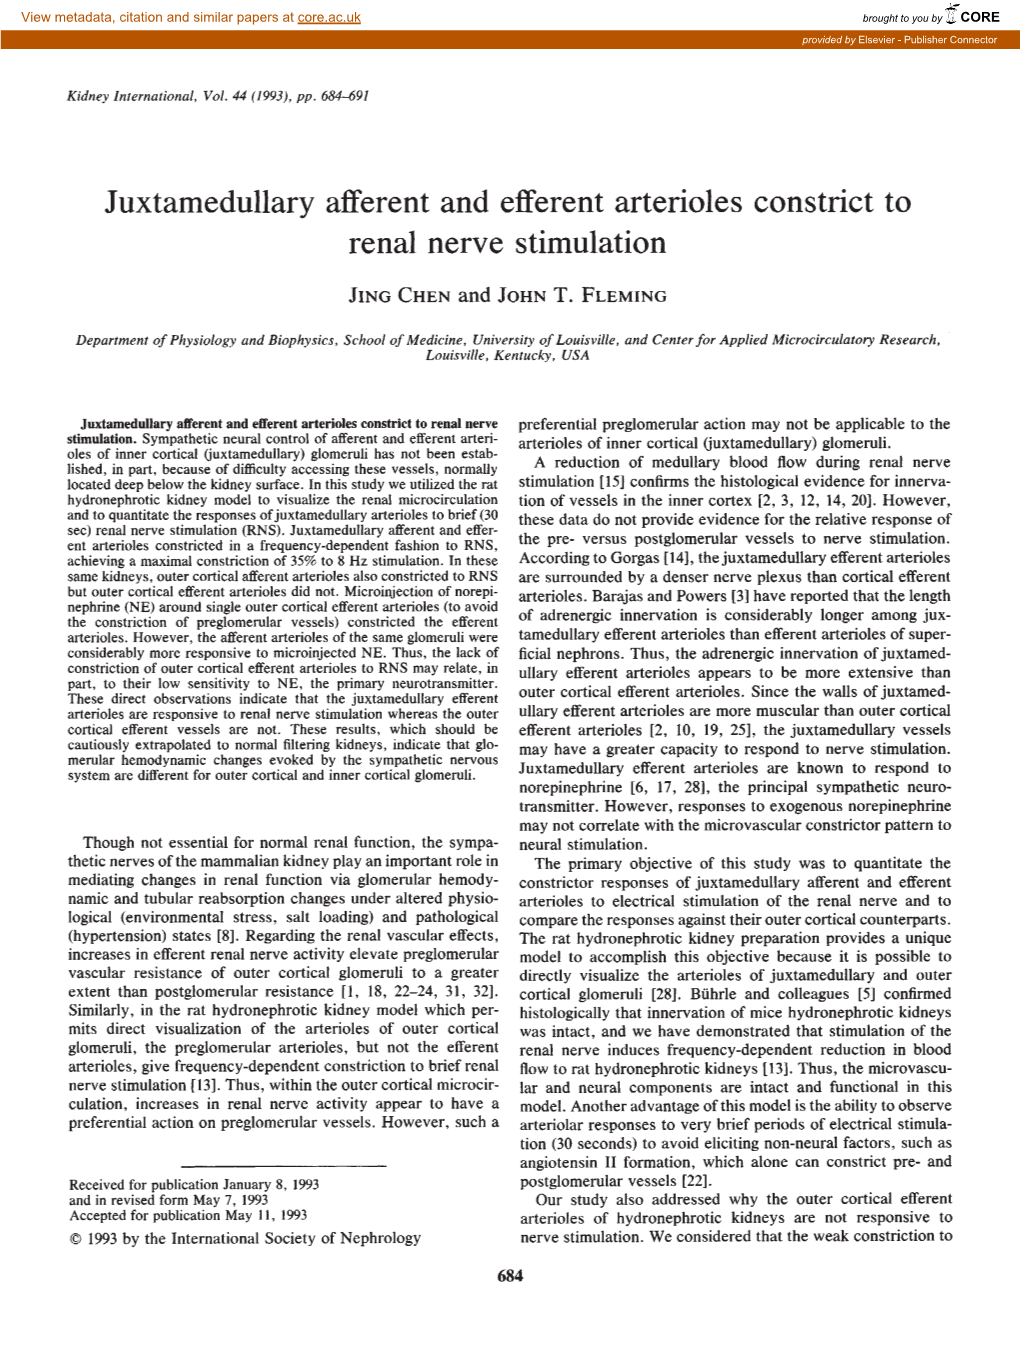 Juxtamedullary Afferent and Efferent Arterioles Constrict to Renal Nerve Stimulation